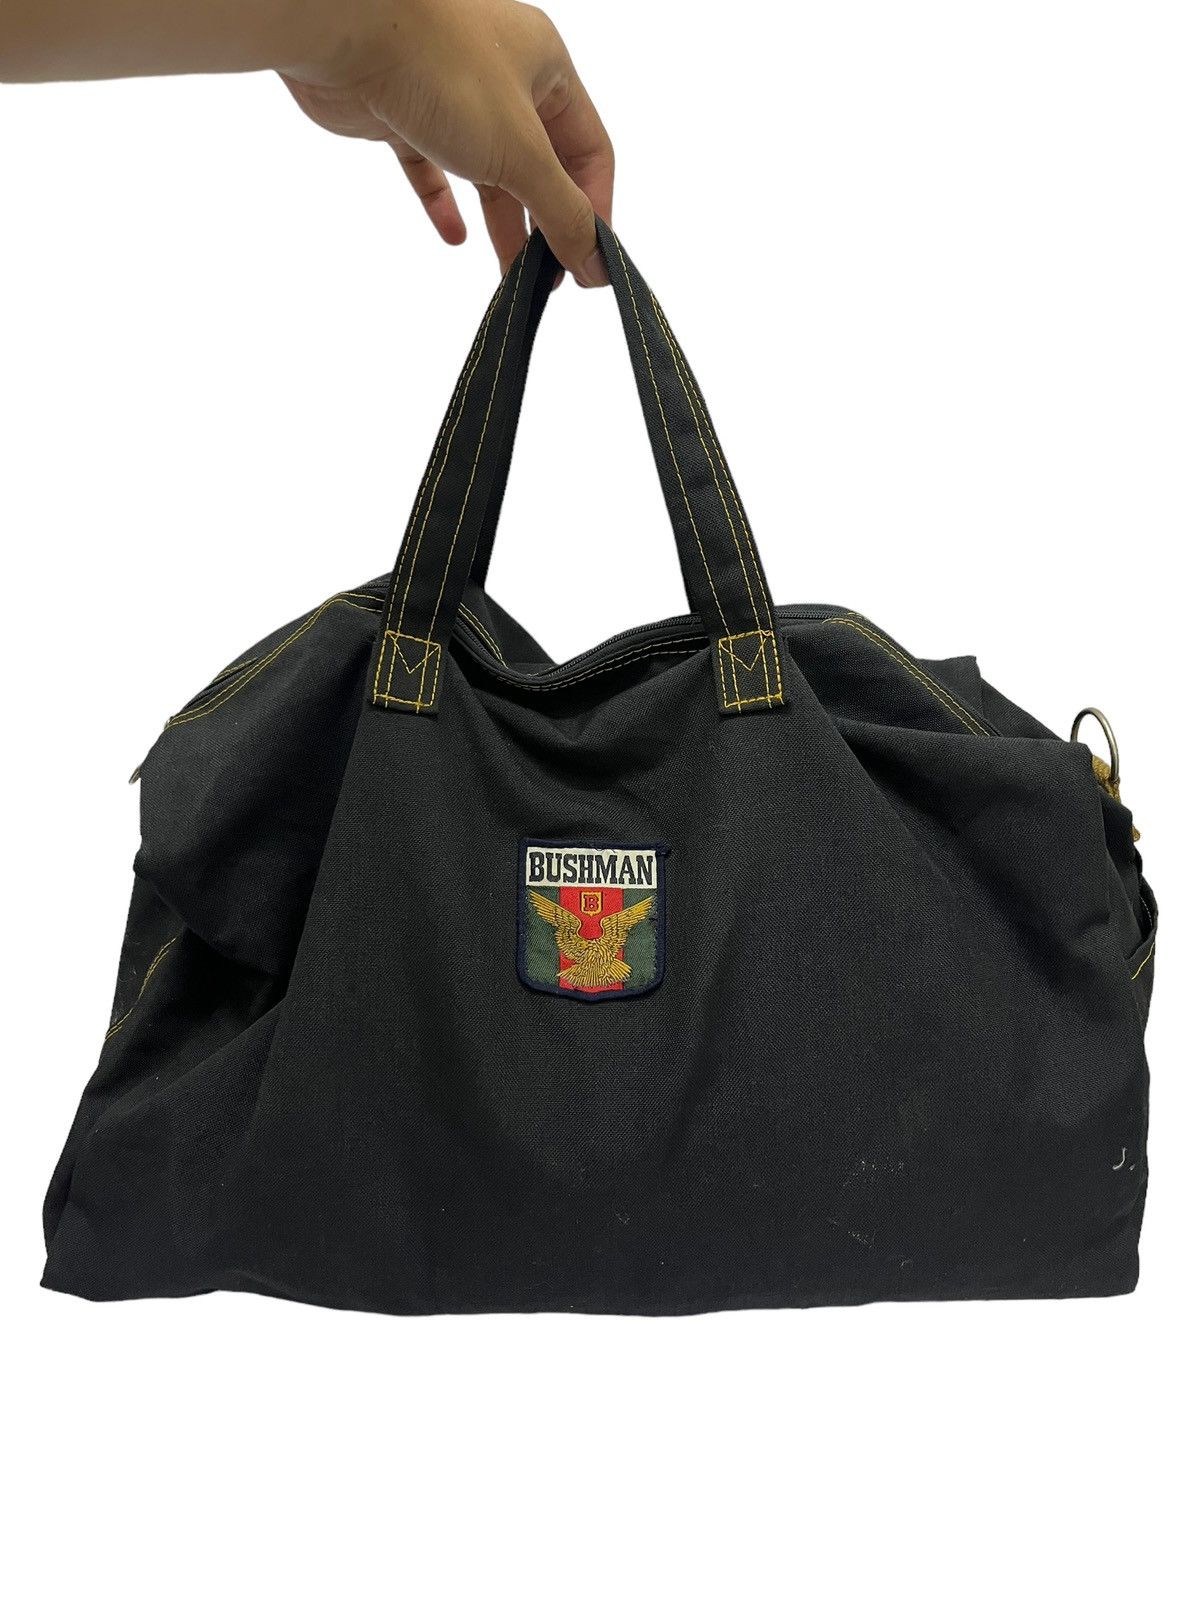 Vintage Bushman Military Duffle Bag - 1